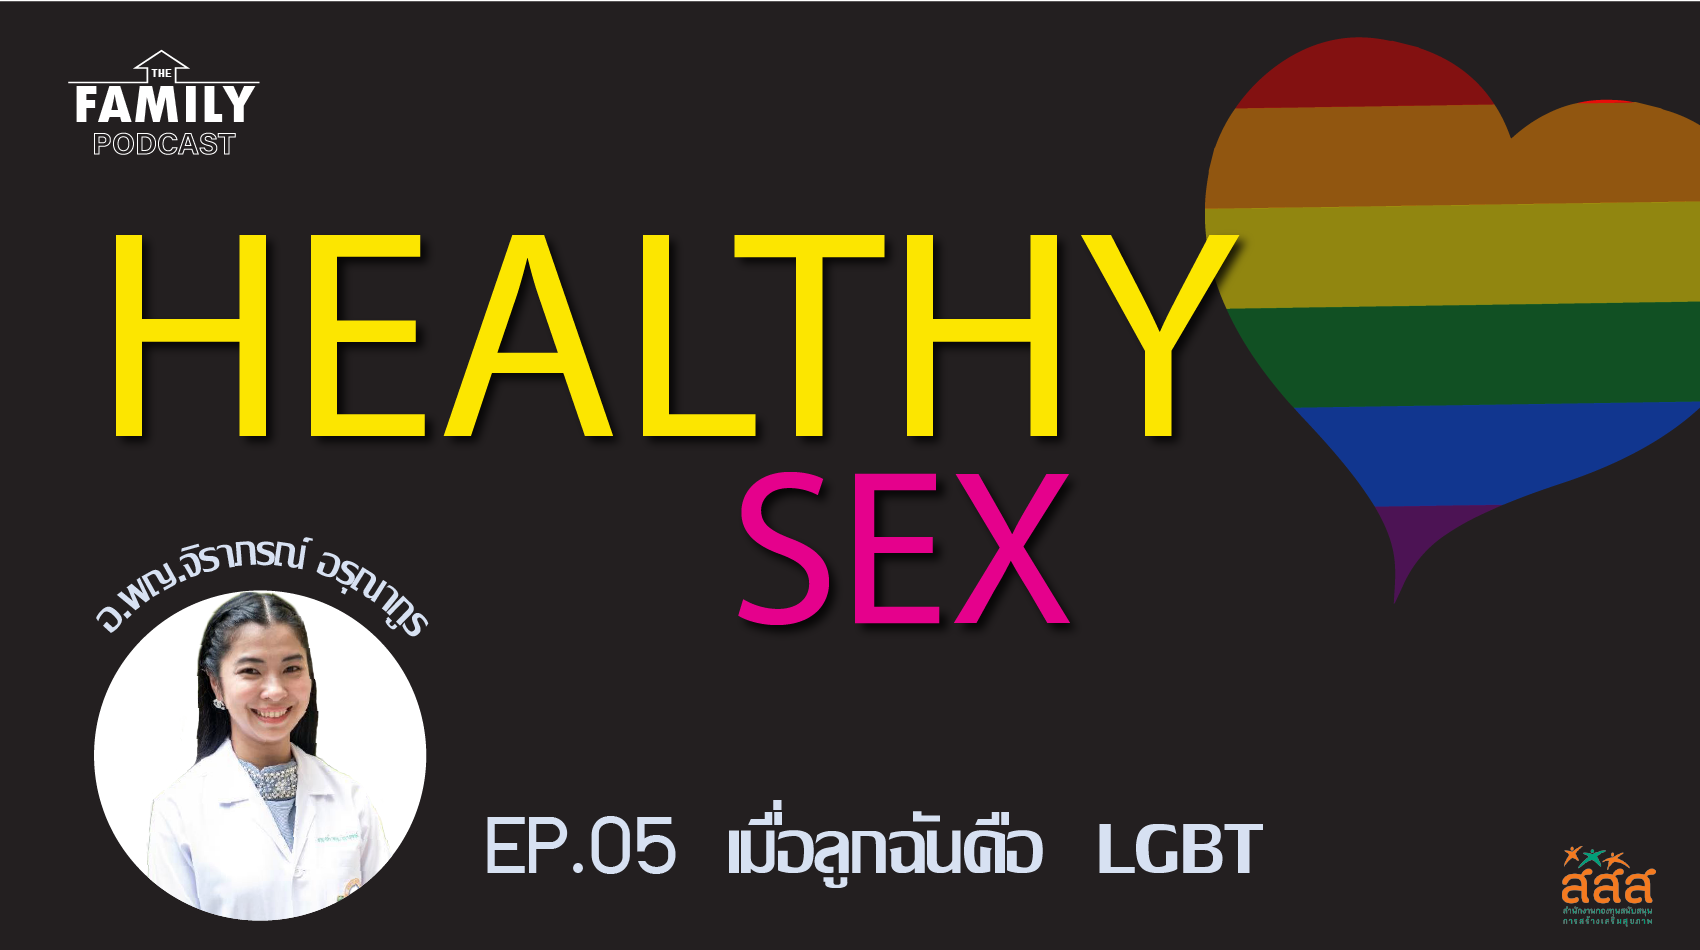 The Family Podcast Healthy Sex EP.05 เมื่อลูกฉันคือ LGBT